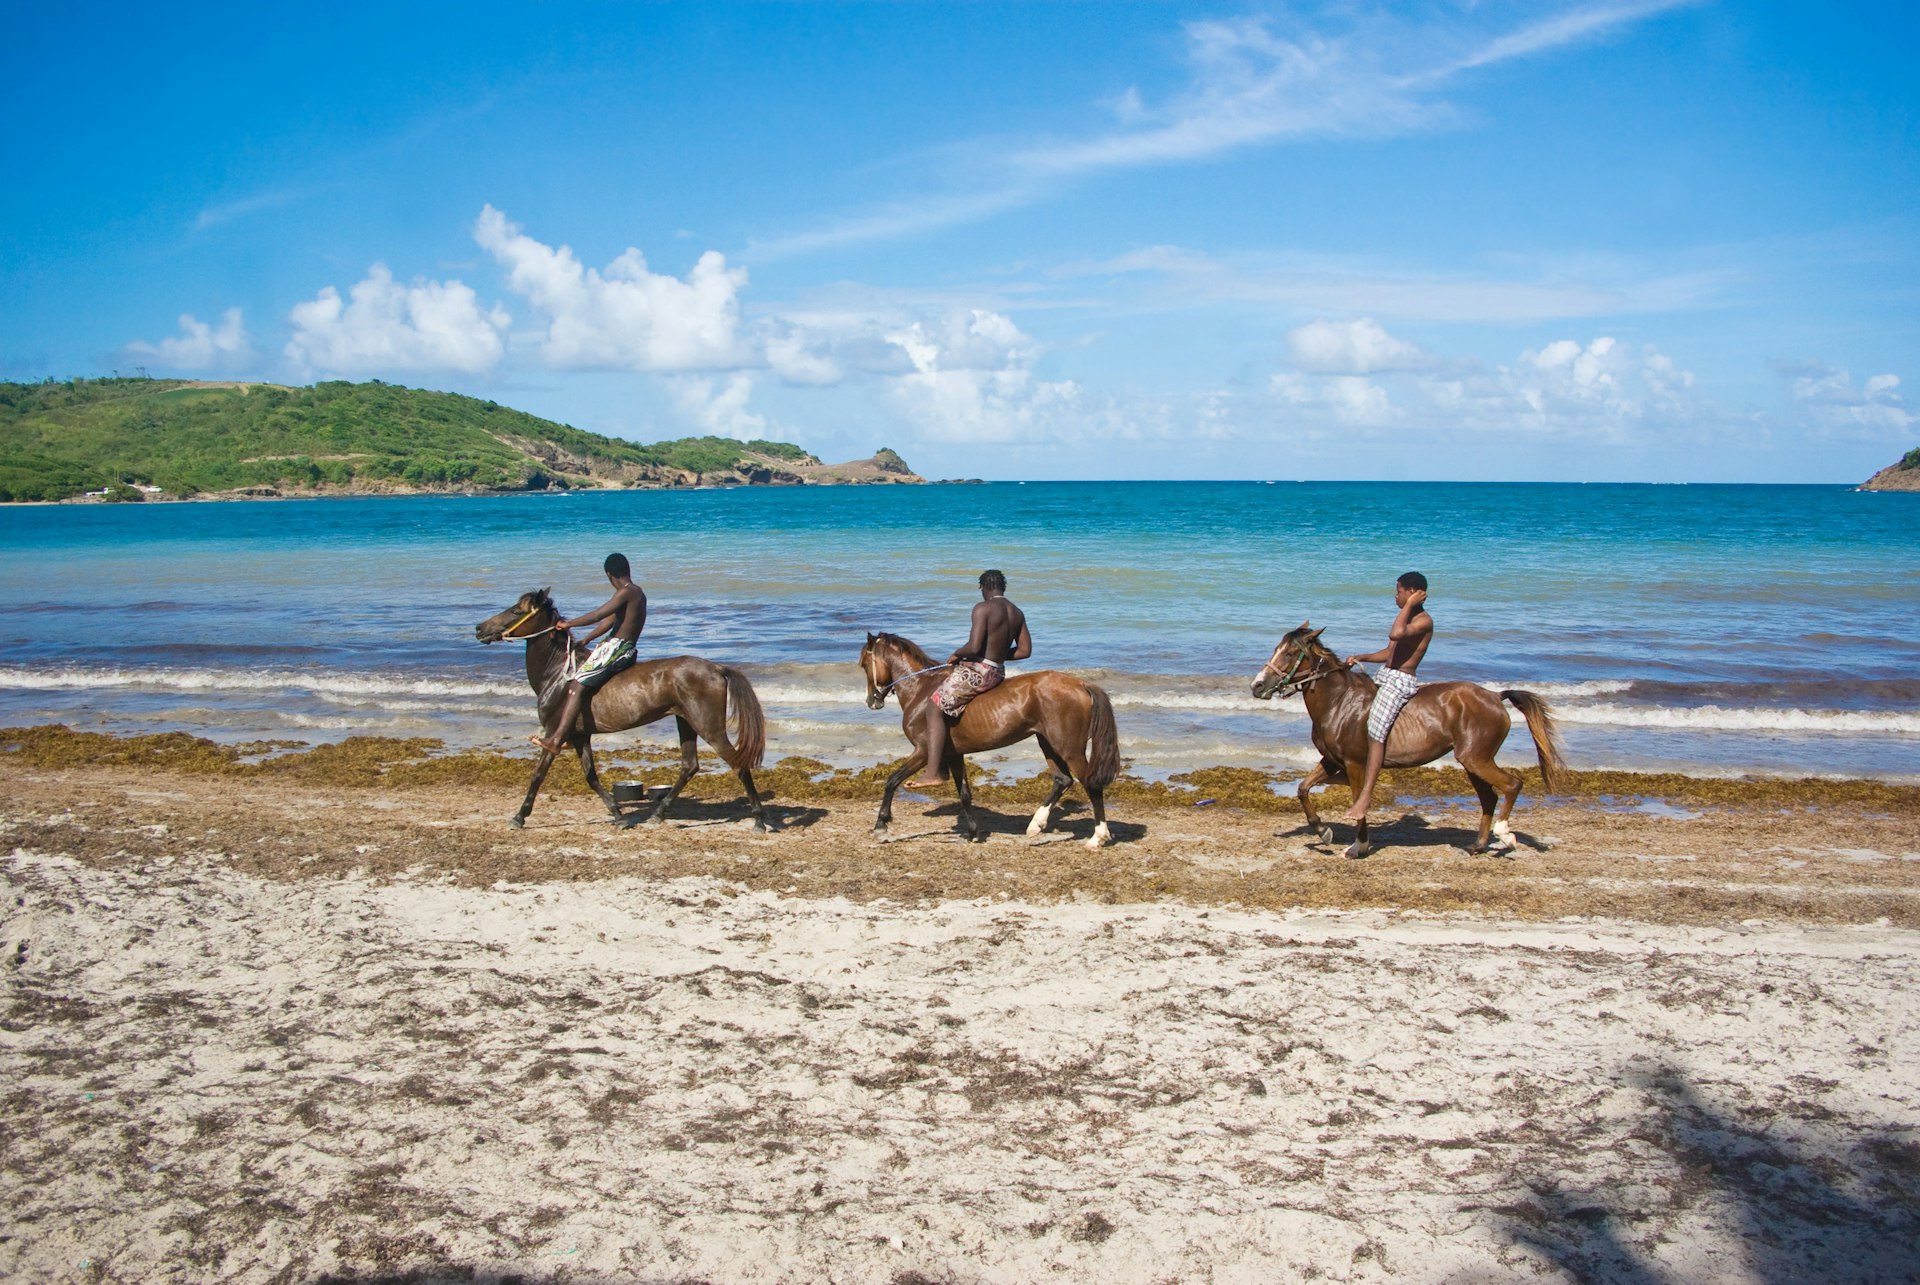 Three young men ride horses on Cas-en-Bas beach, St Lucia, West Indies, Caribbean